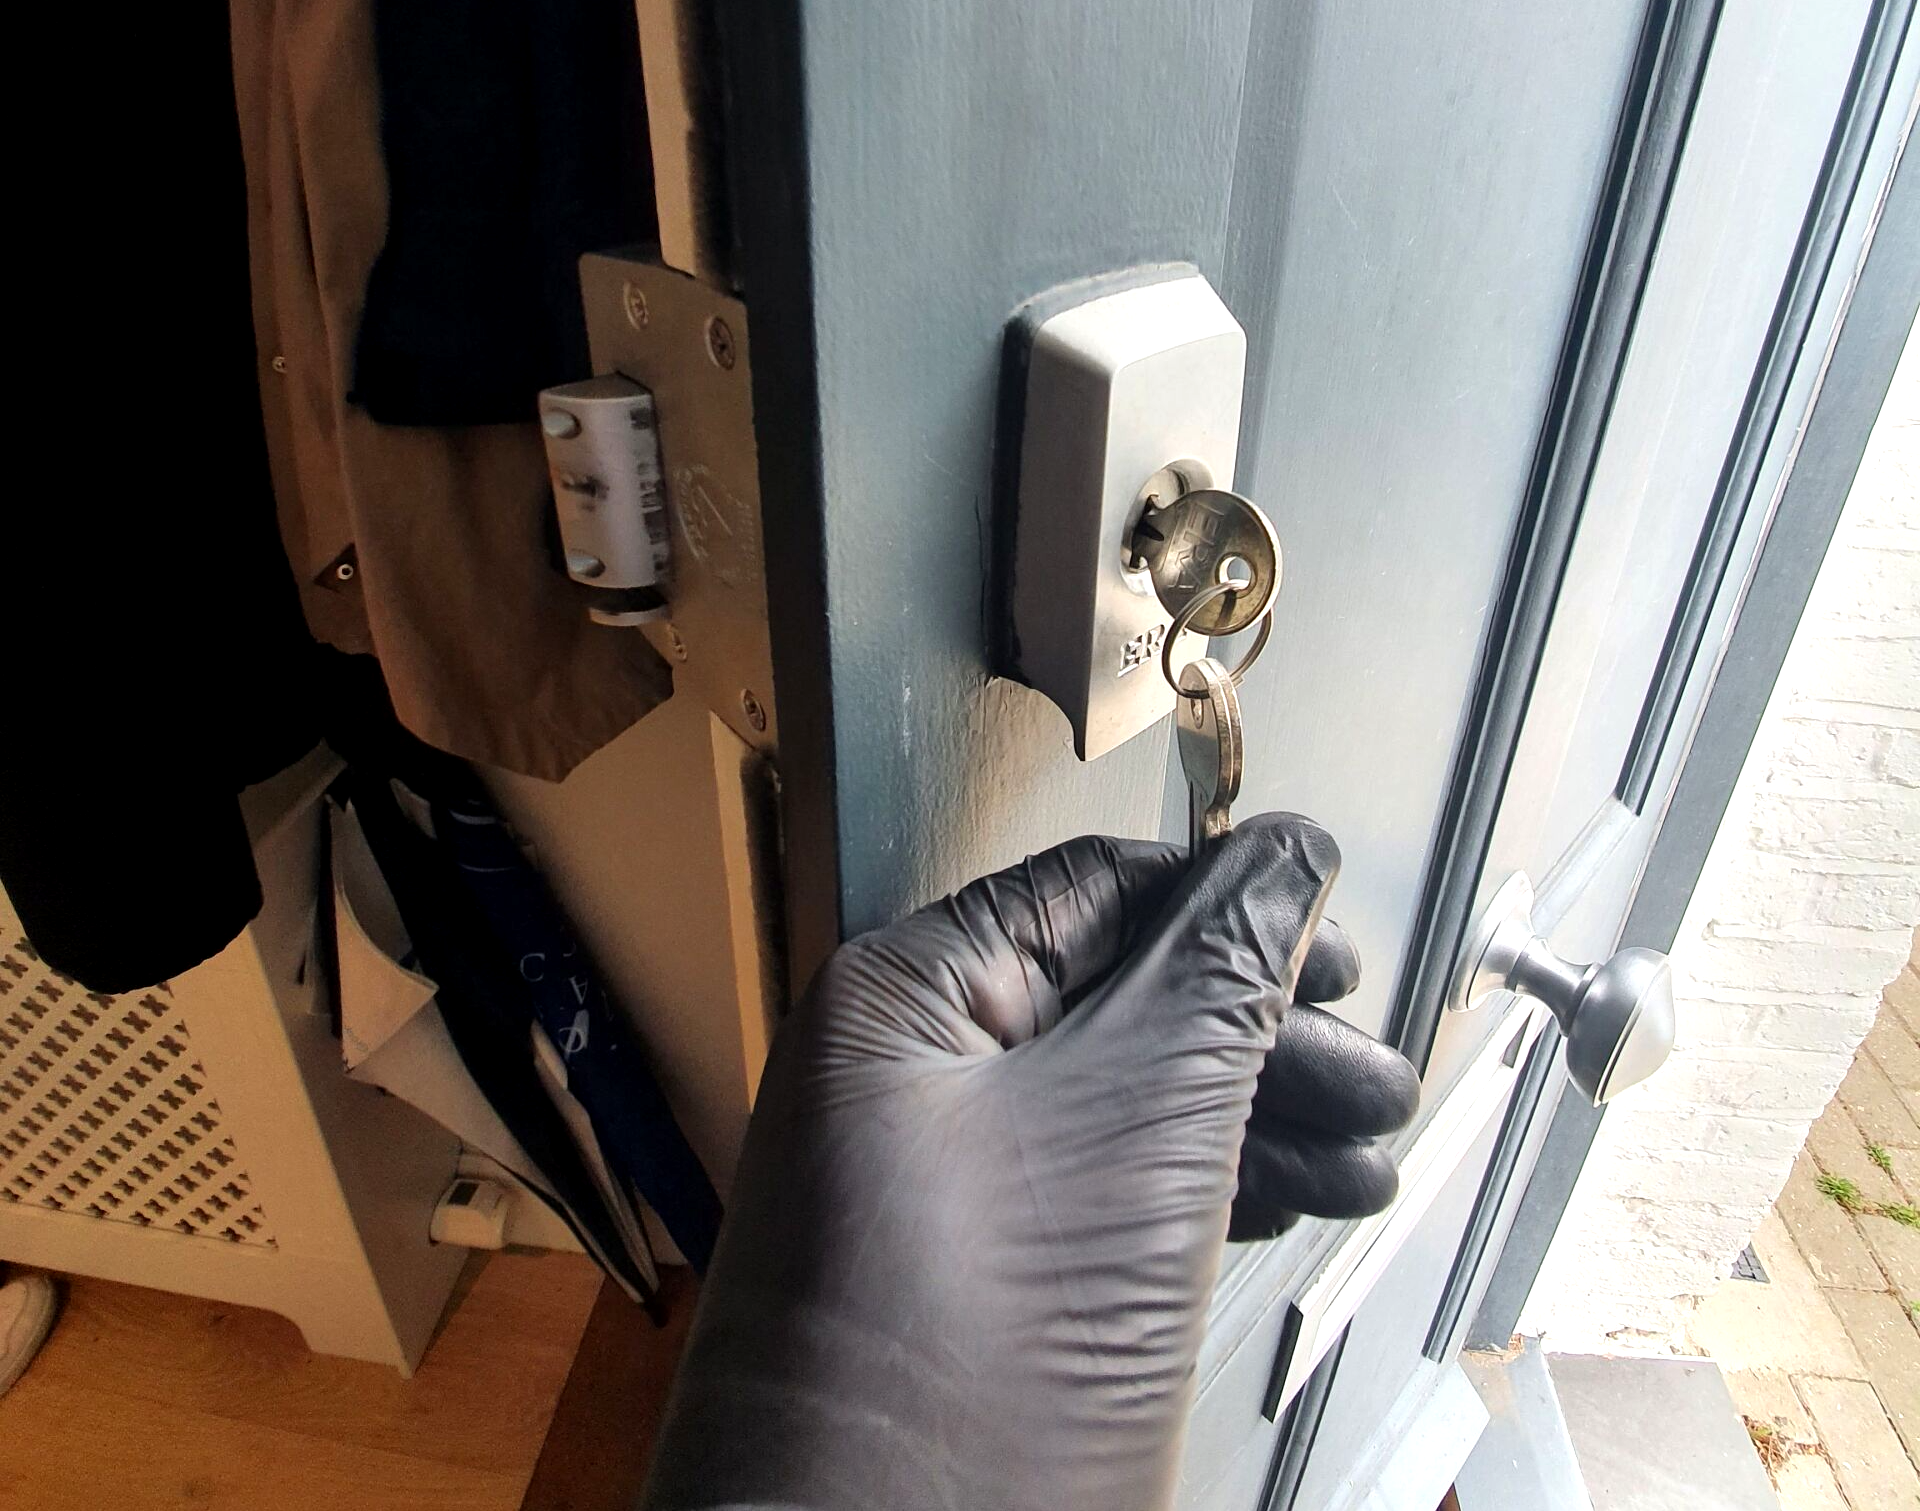 Lock upgrade locksmith services in and around Morden